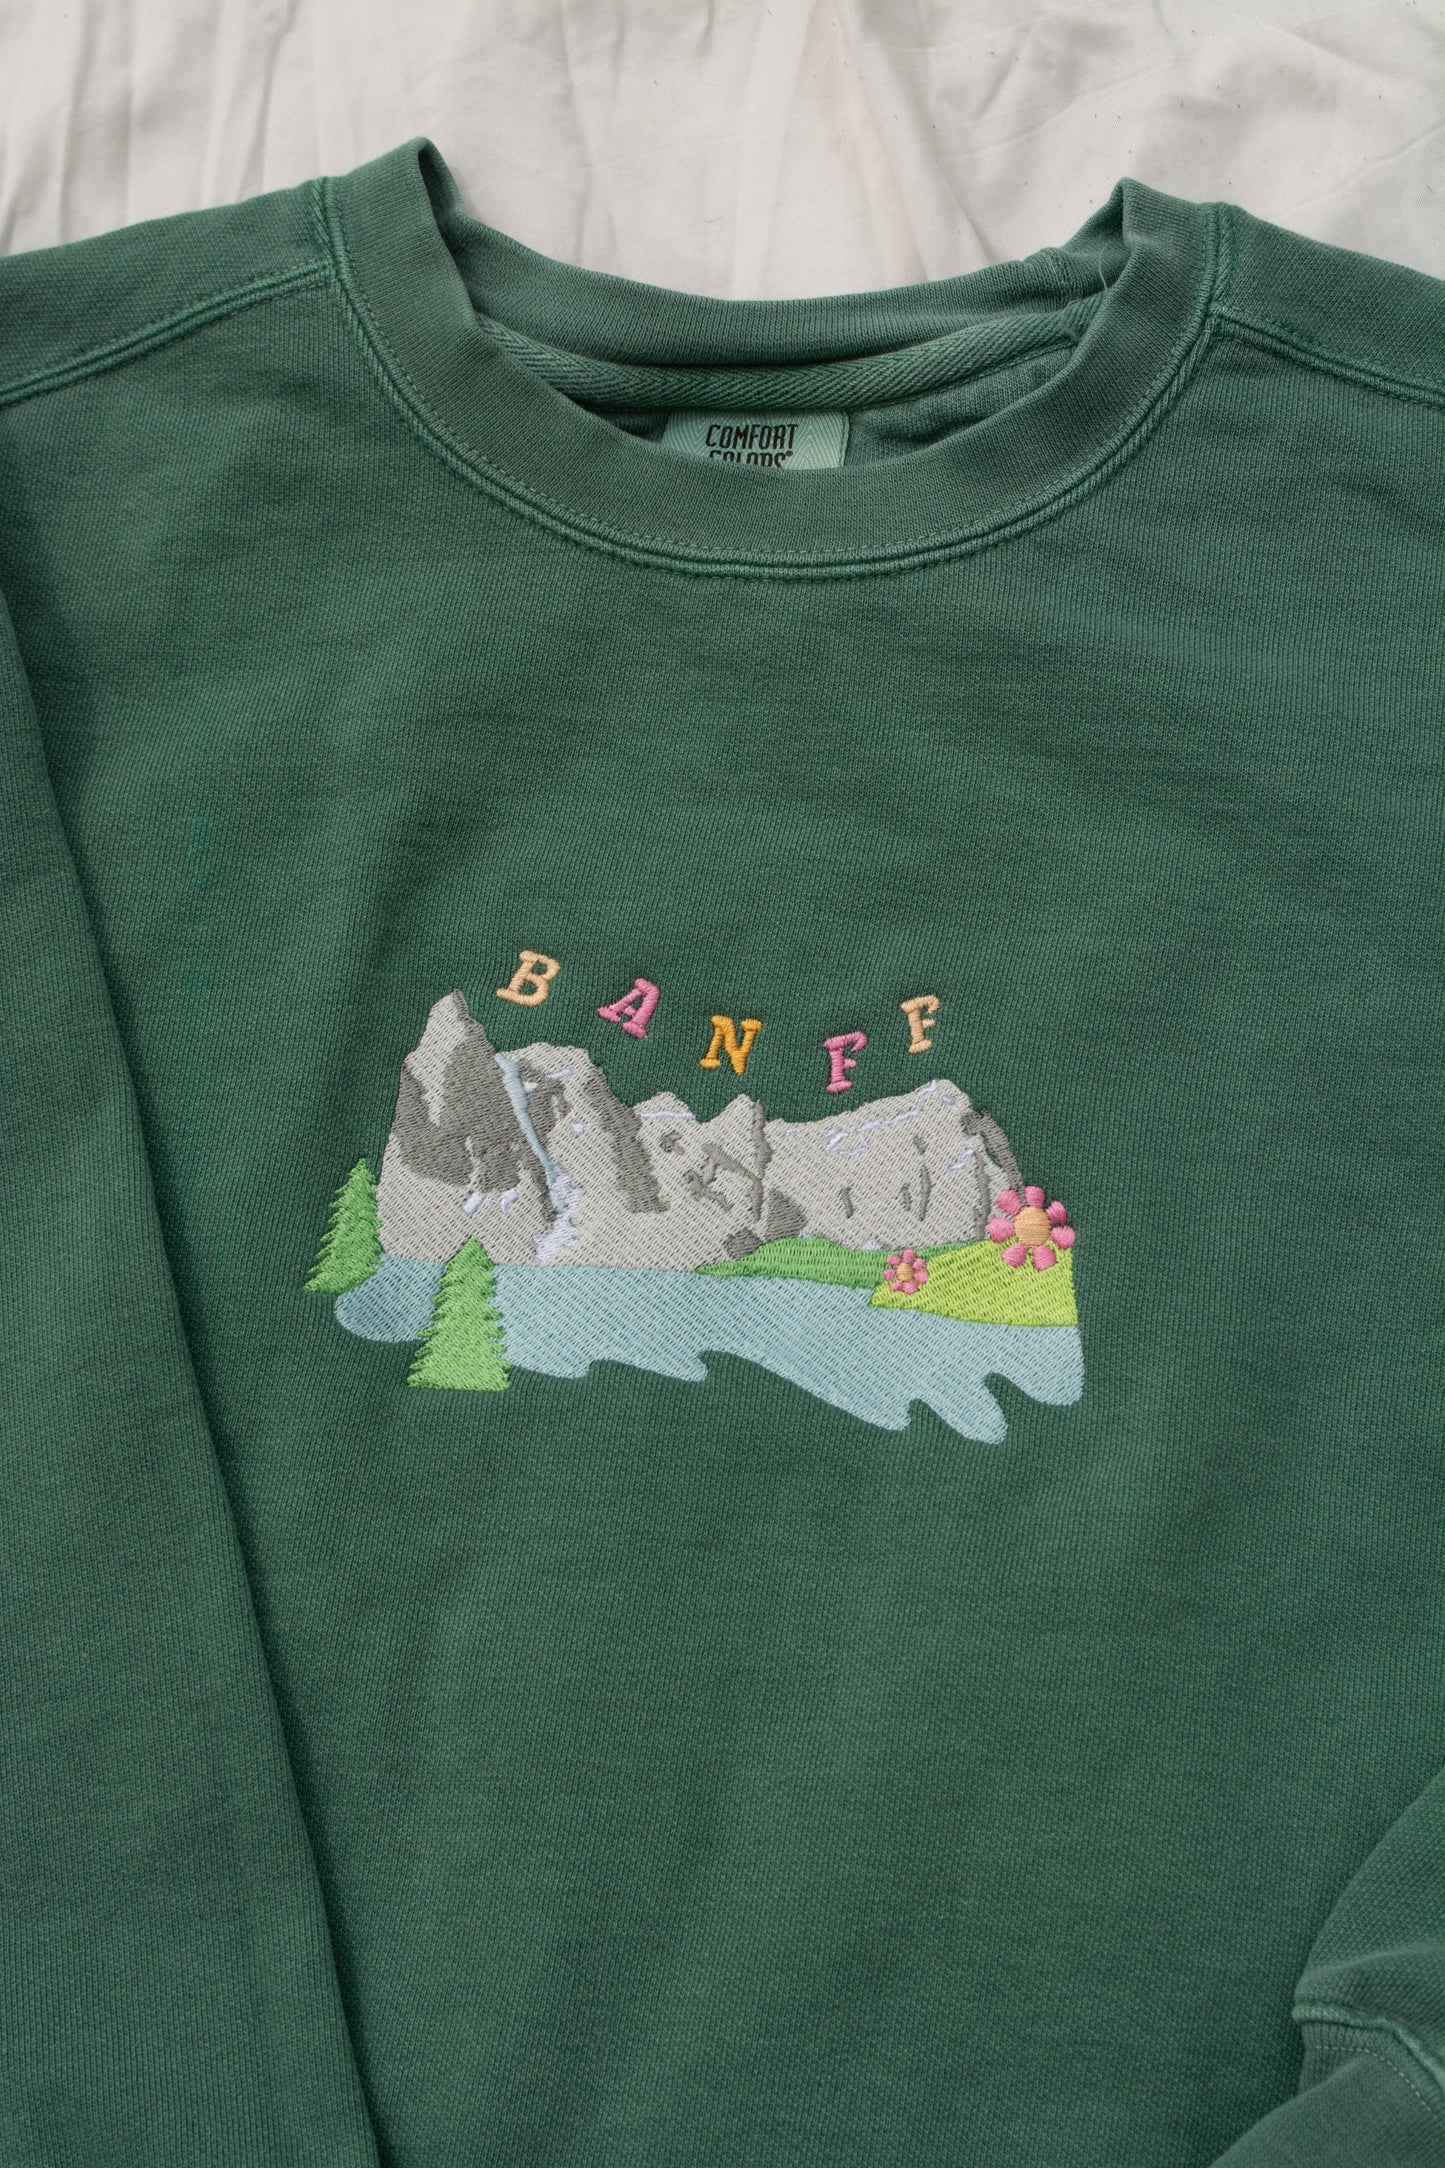 Banff National Park Canada Sweatshirt